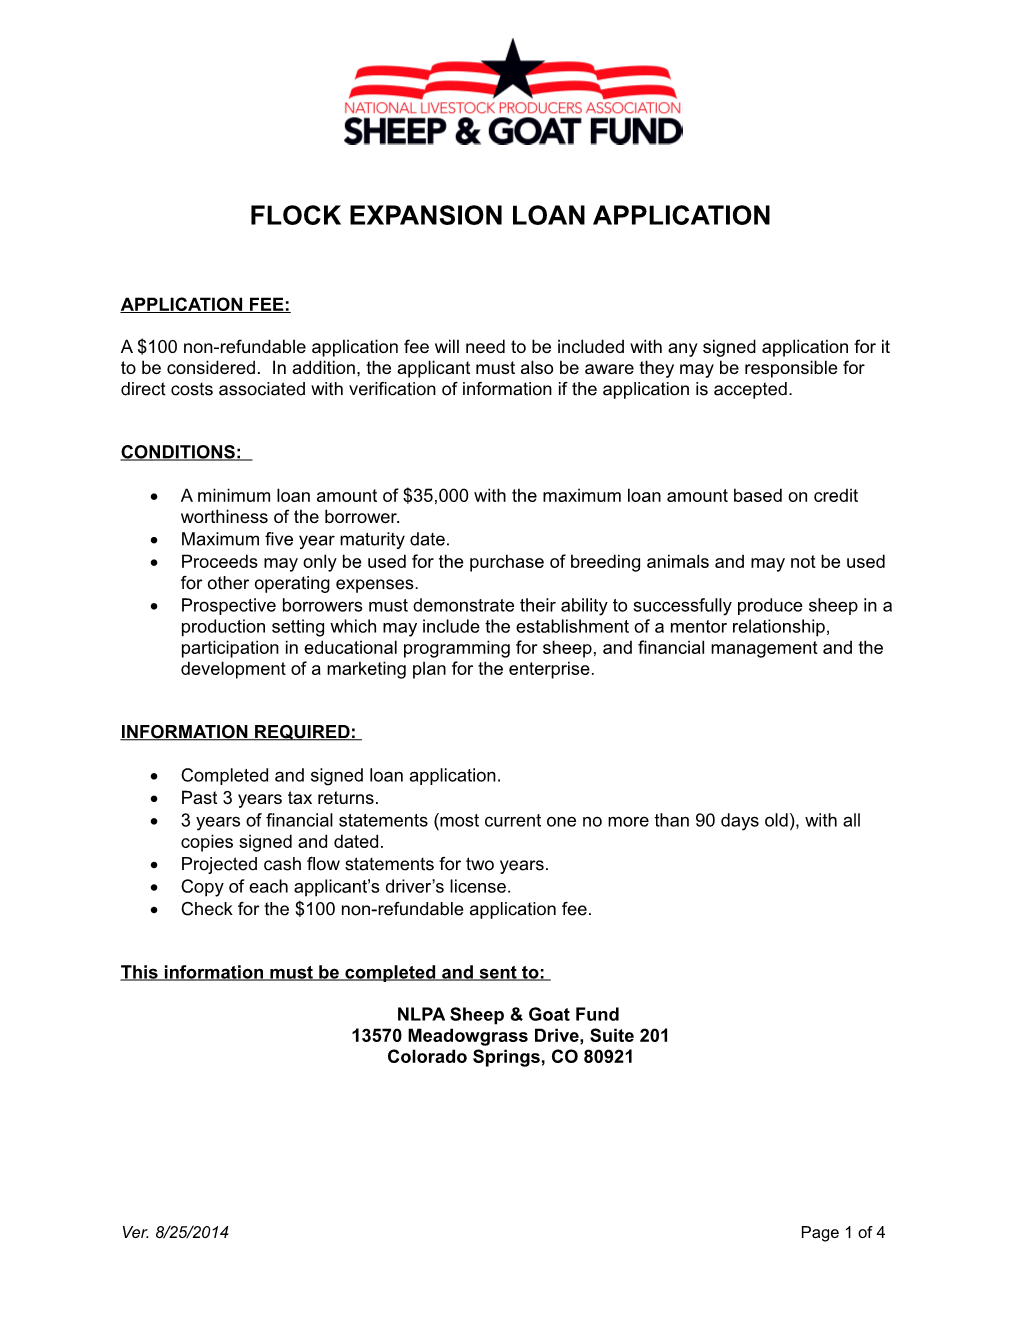 Flock Expansion Loan Application